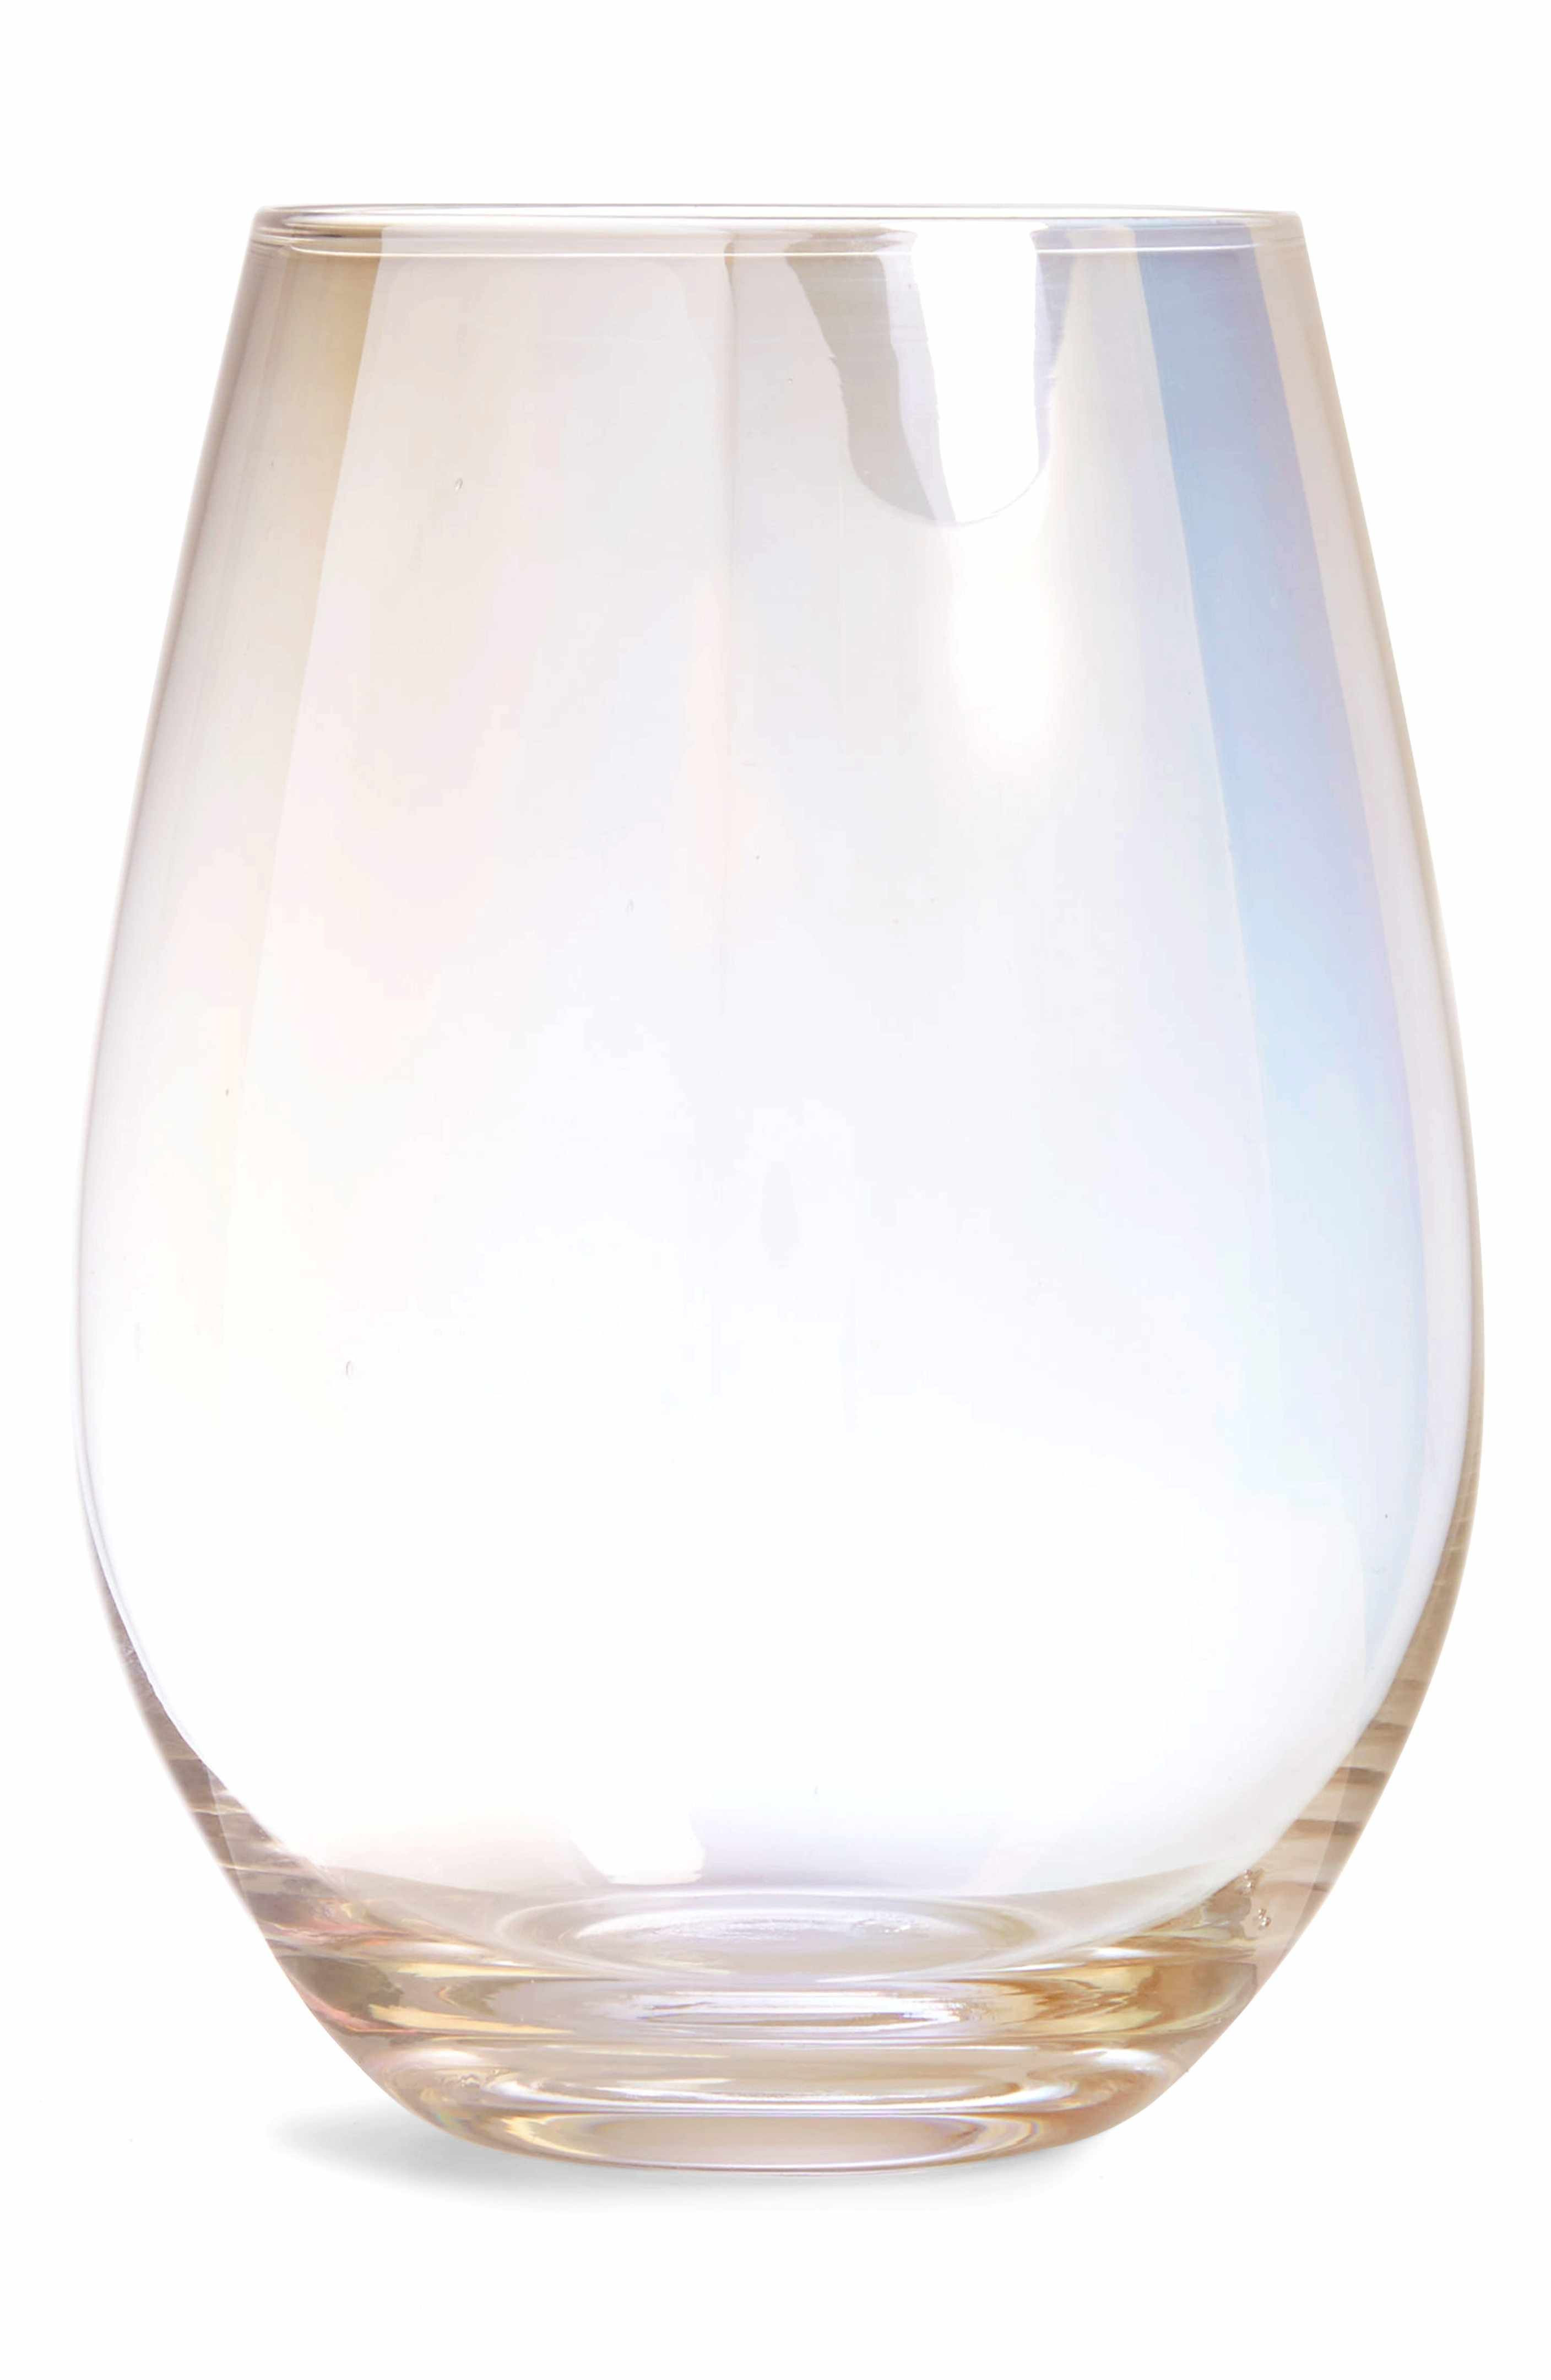 10 Elegant Slanted Glass Vase 2024 free download slanted glass vase of main image slant collections luster stemless wine glass regarding main image slant collections luster stemless wine glass